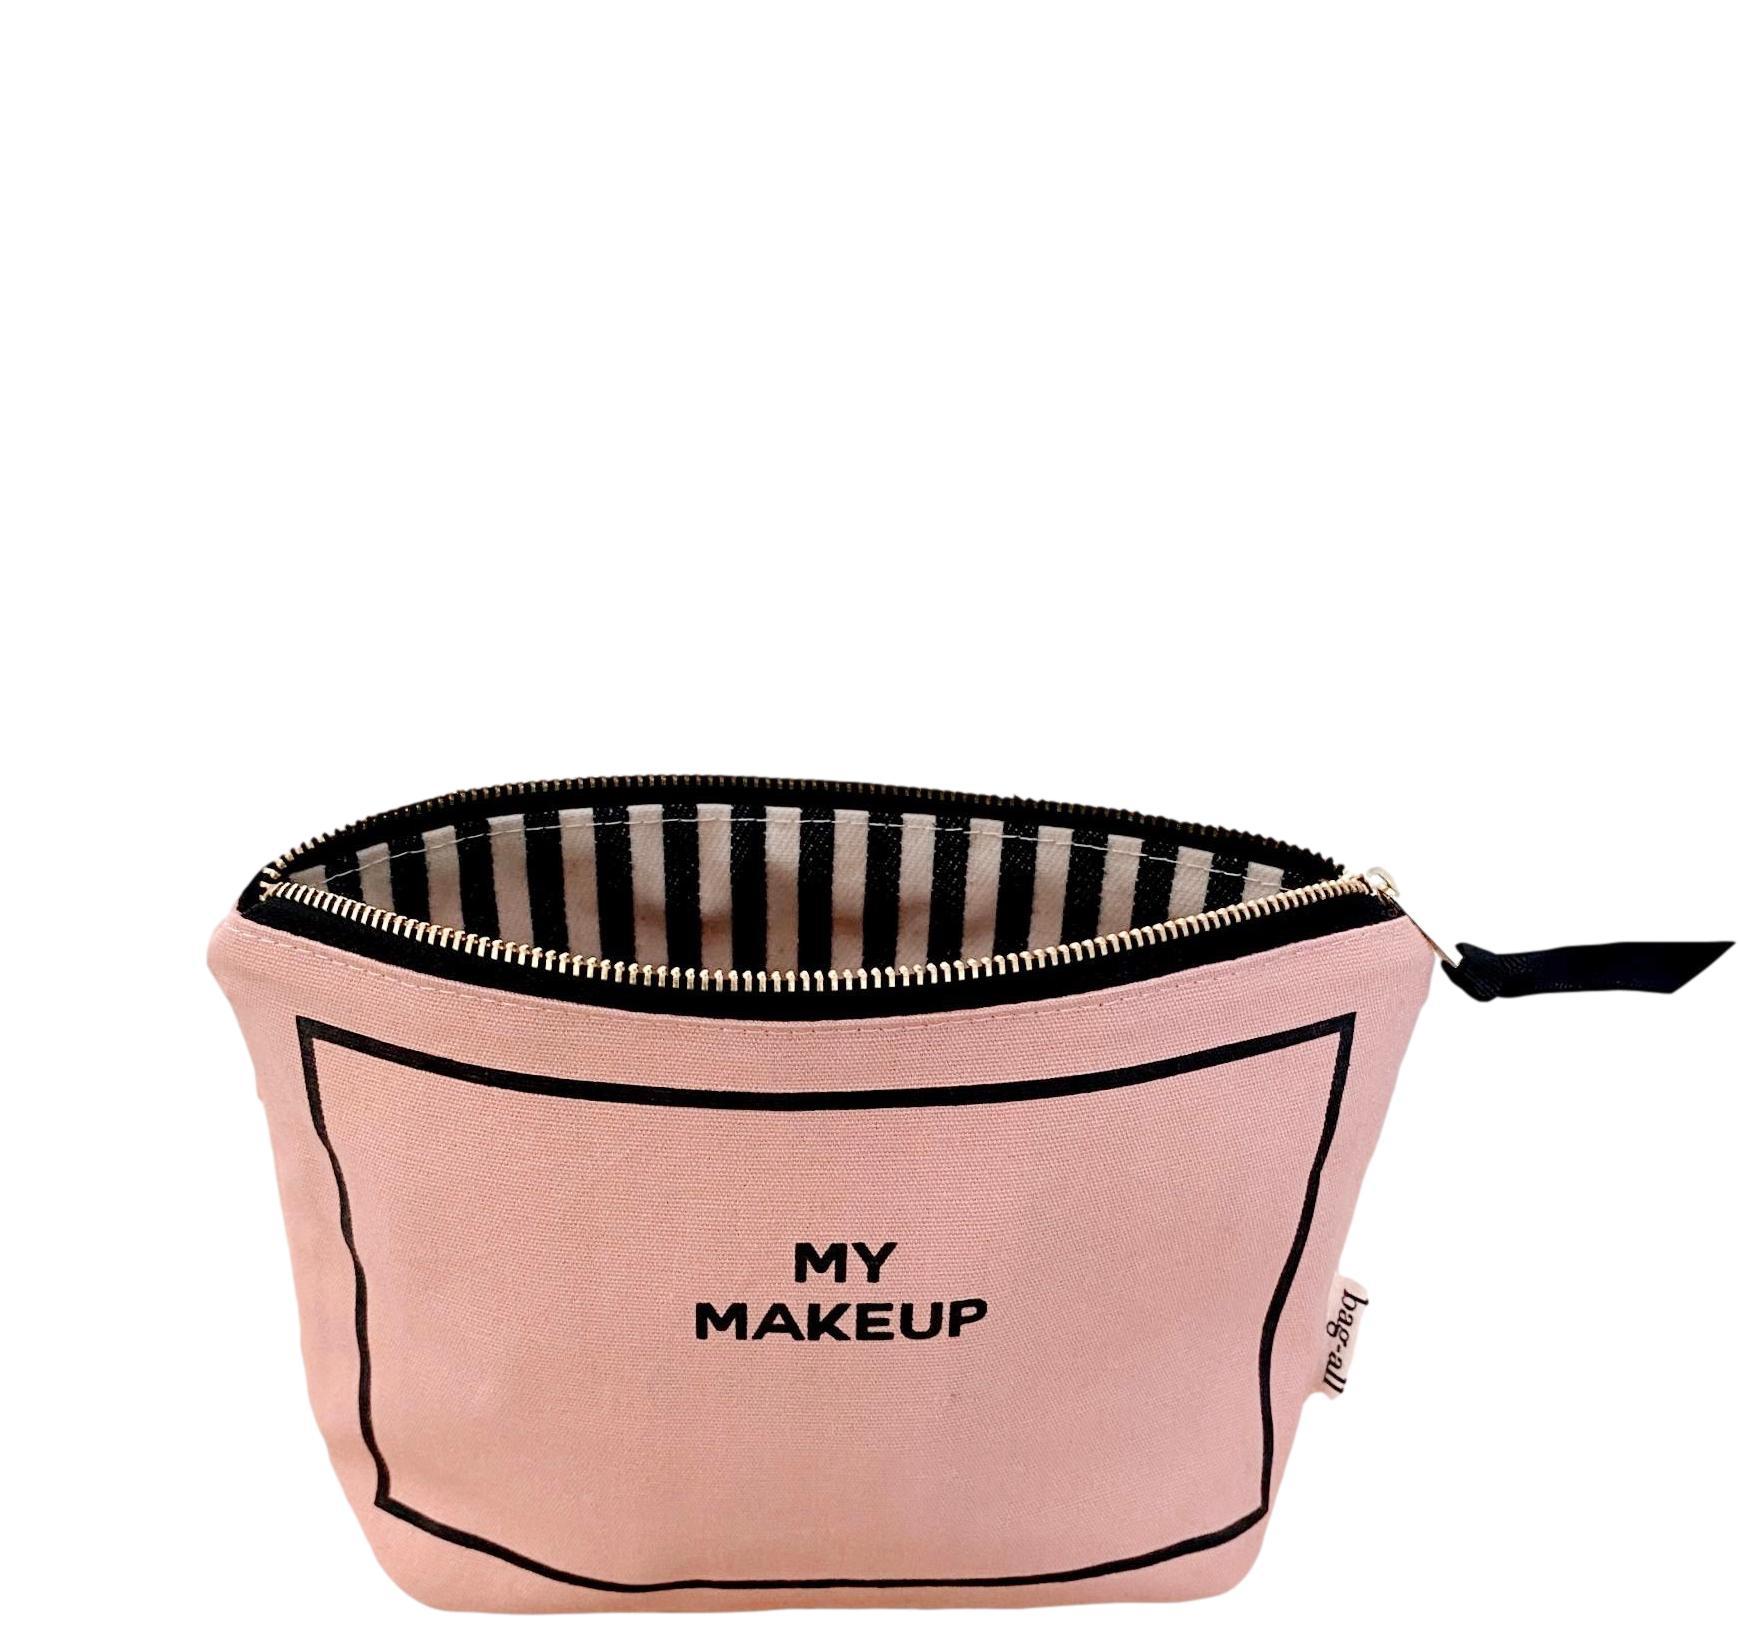 Most Popular Cases For Her, Pink 3-pack - Deal Gift Set - Bag-all